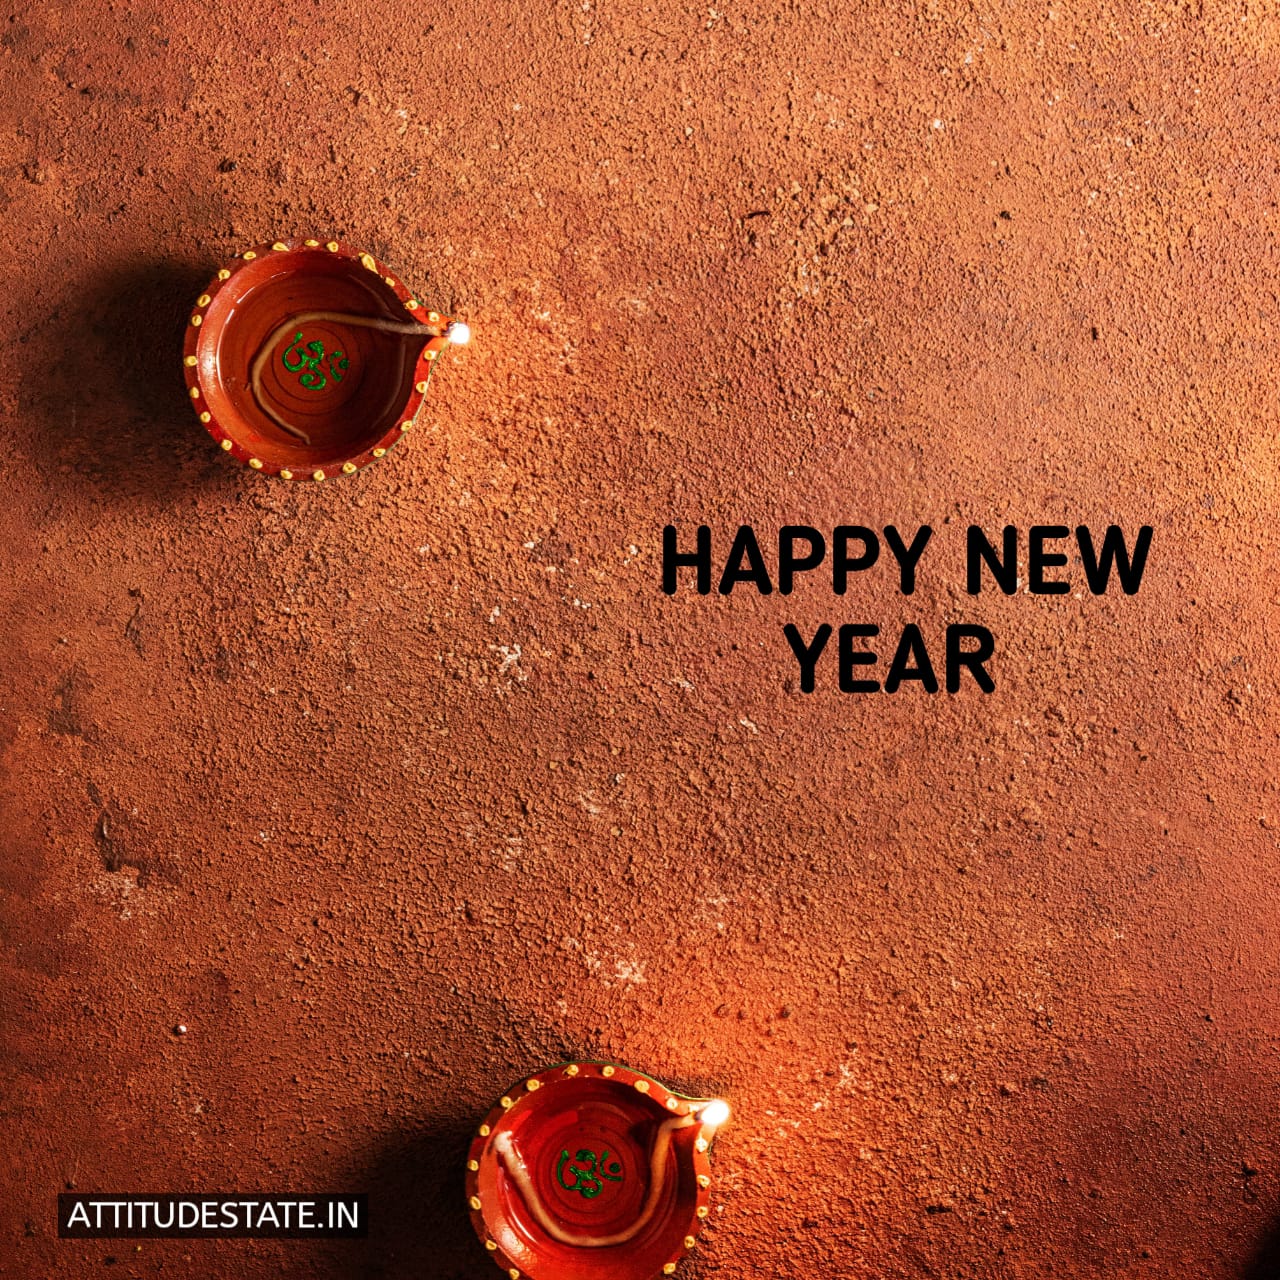 Happy new year 2023 photo download | Attitudestate - 2023